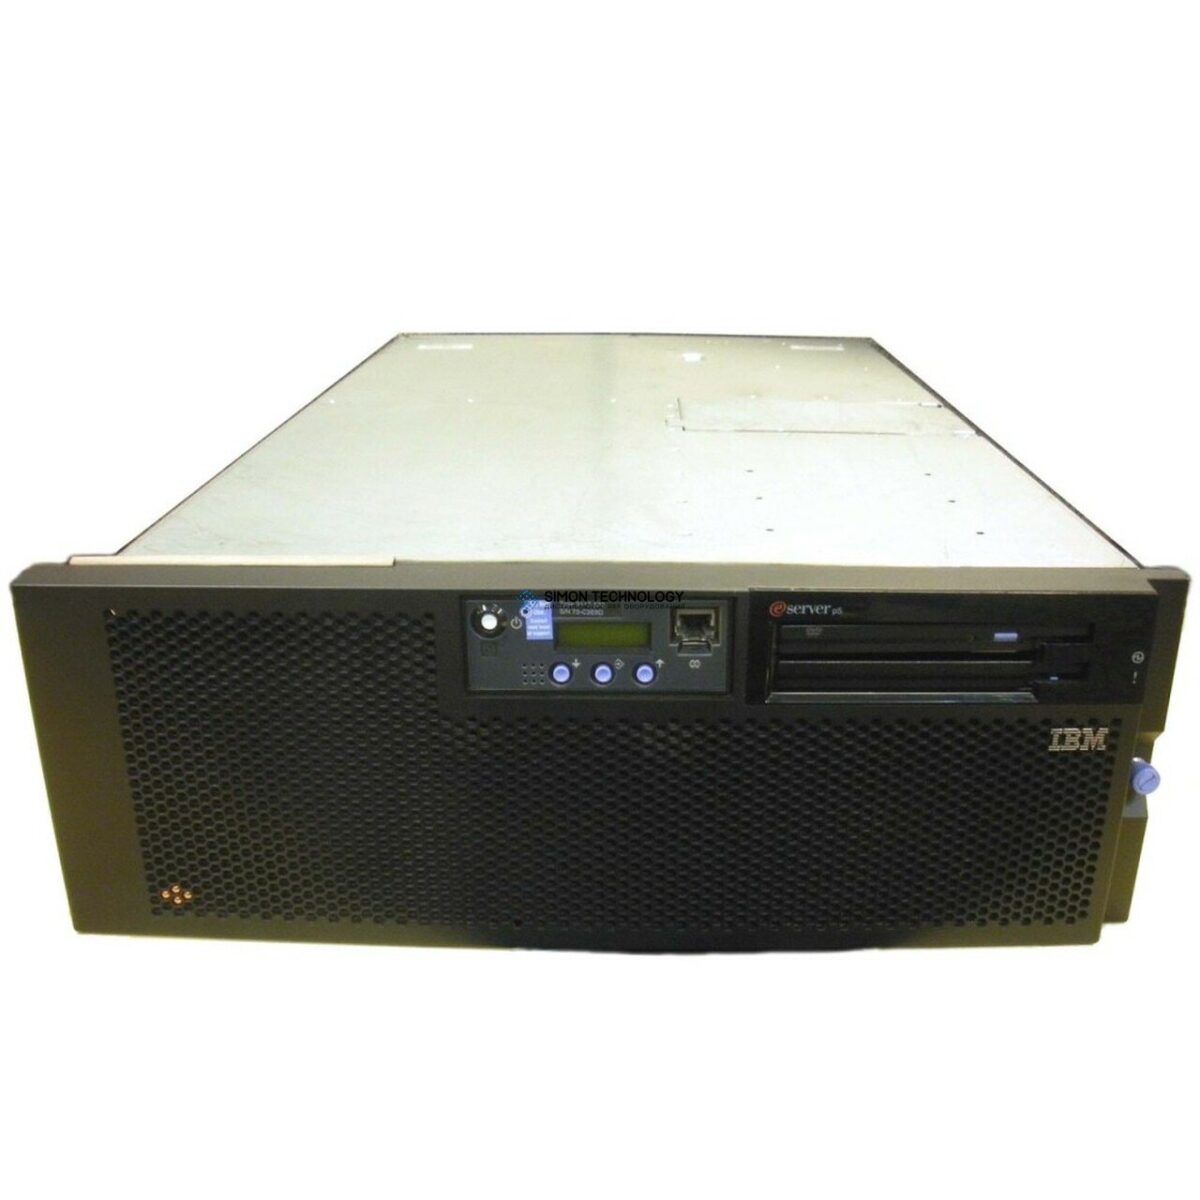 Сервер IBM ESERVER 570 (9117-570)